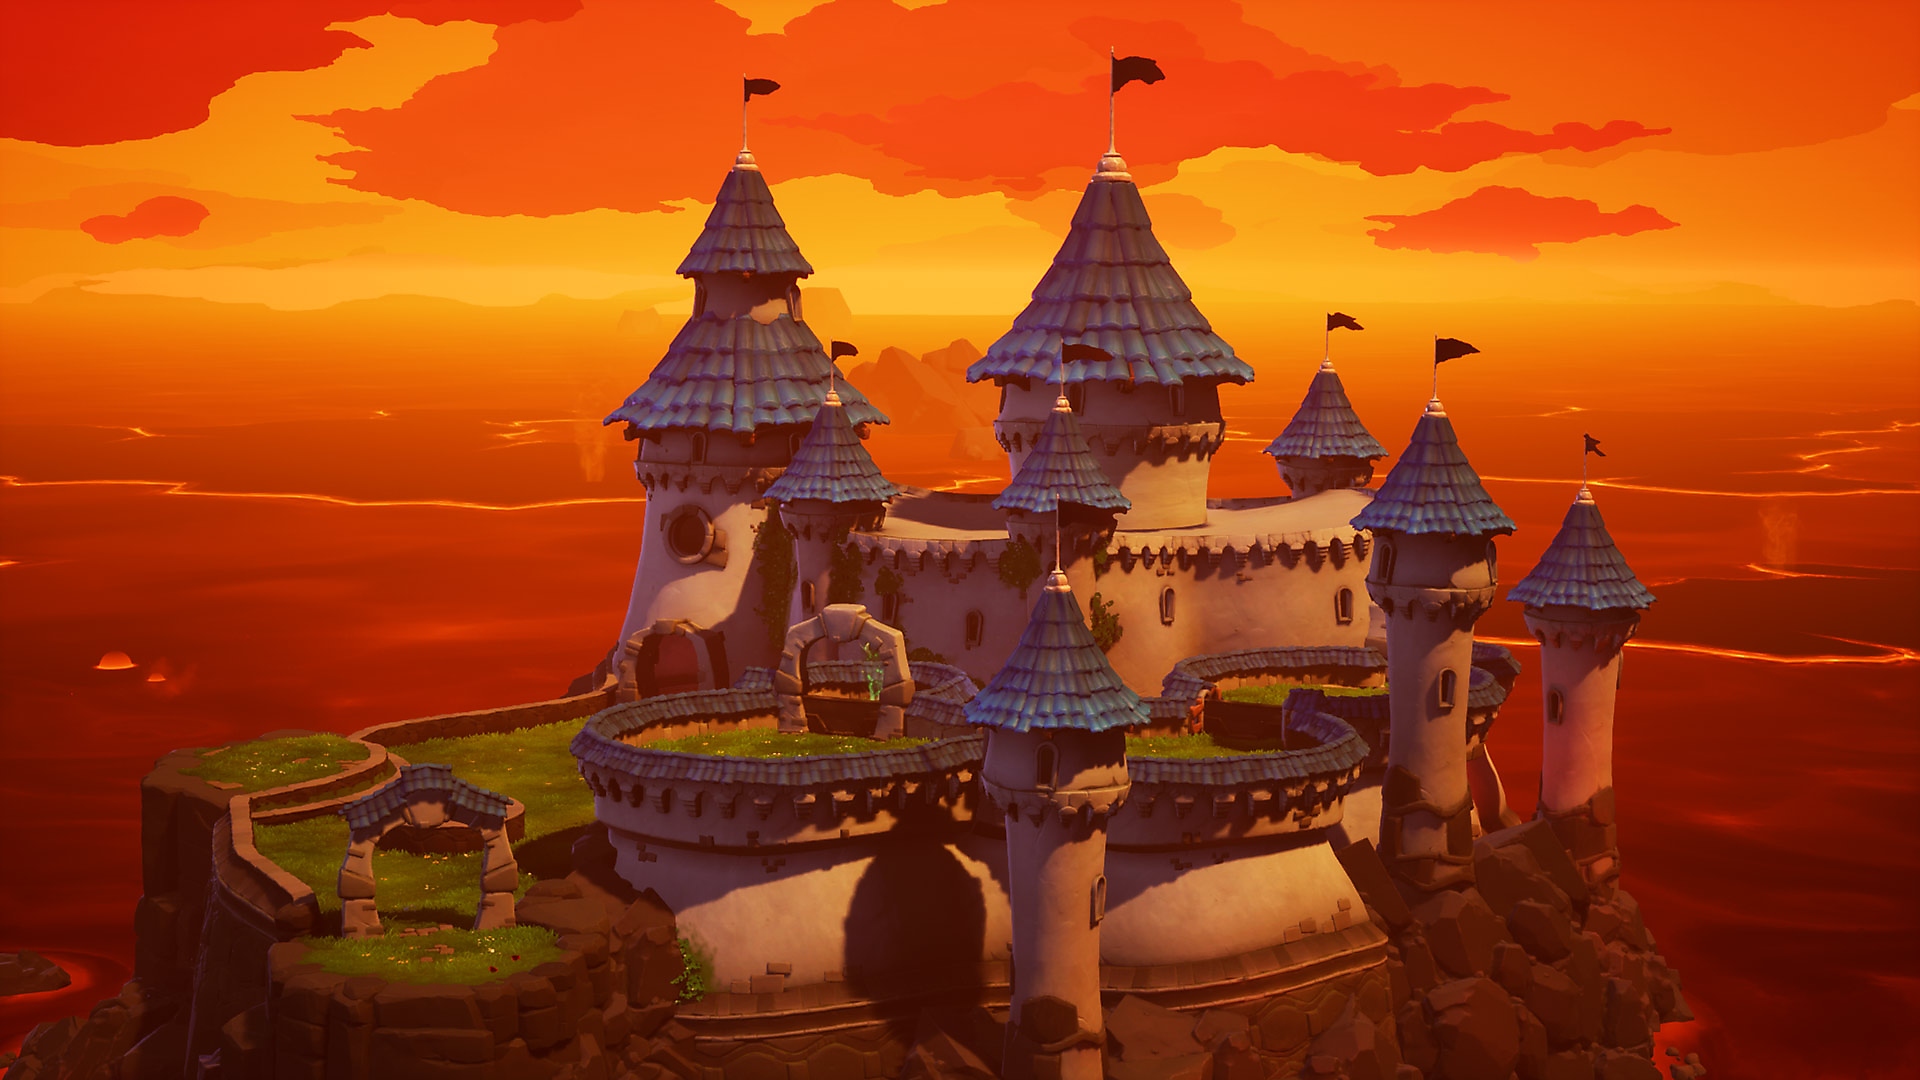 Spyro Reignited Trilogy – снимок экрана